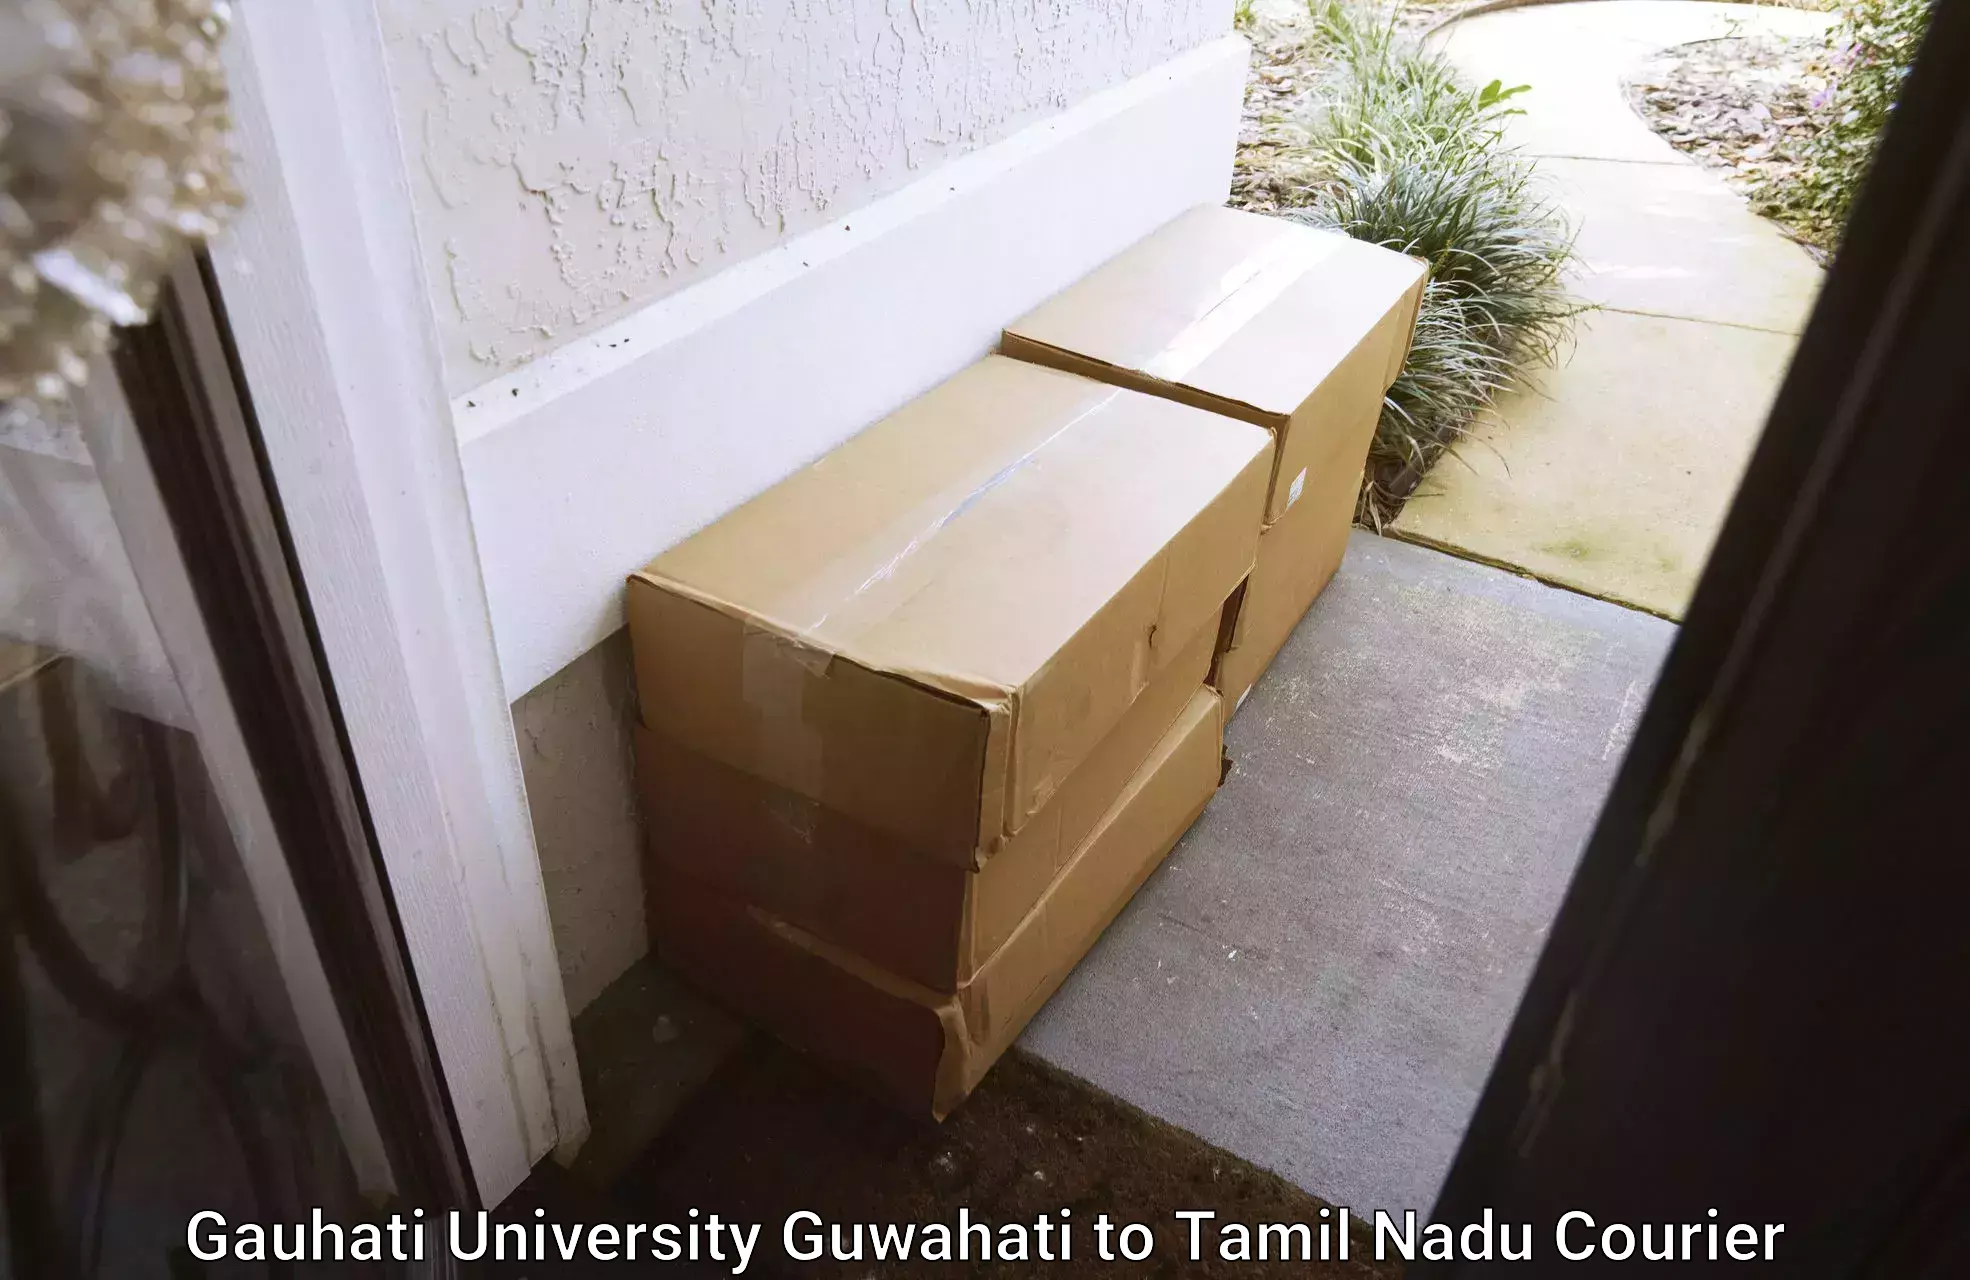 Express delivery network Gauhati University Guwahati to Tamil Nadu